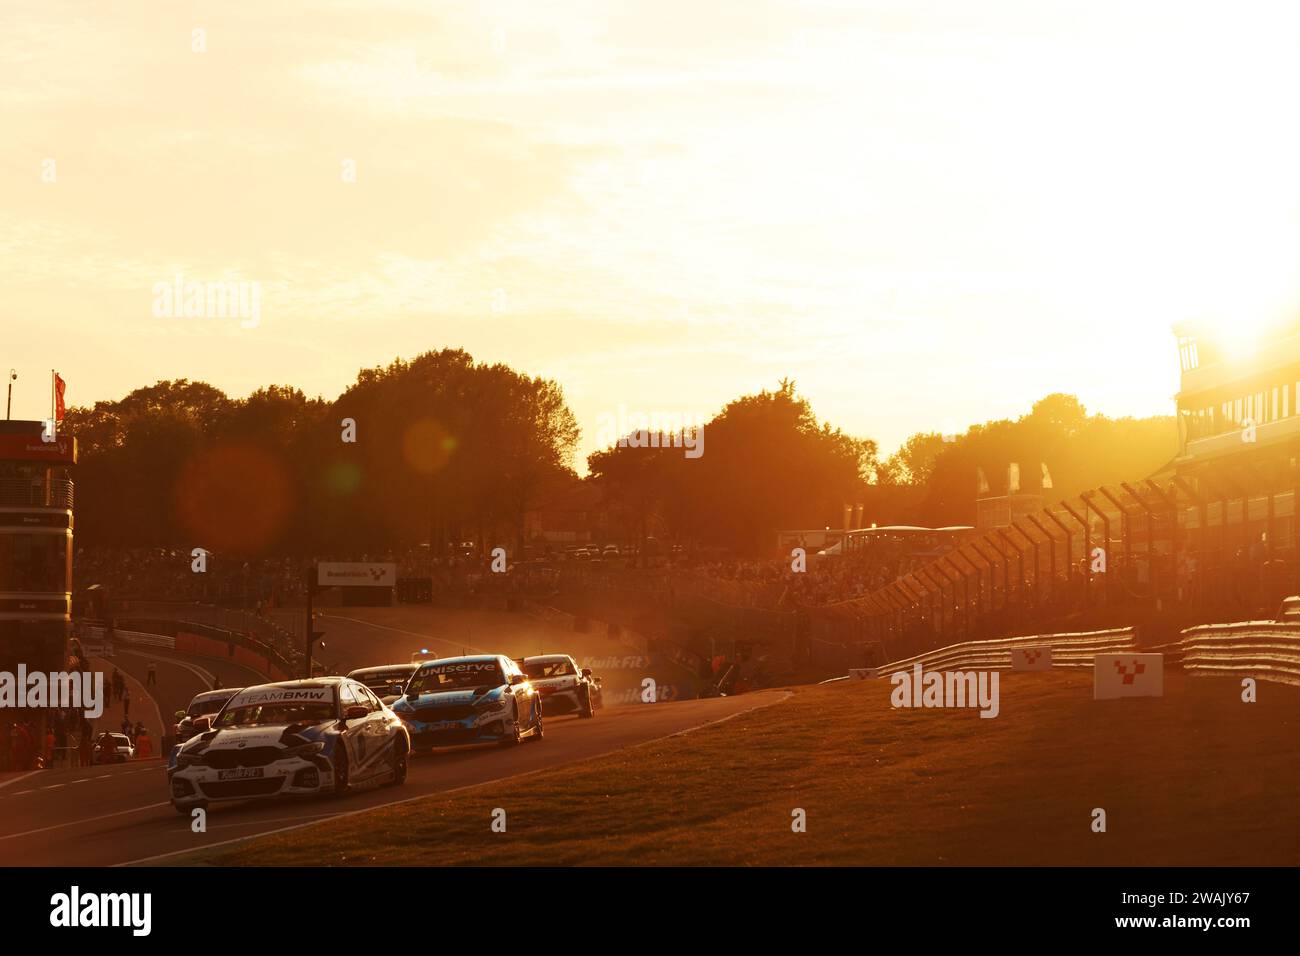 Stephen Jelley Racing al tramonto a Brands Hatch Foto Stock